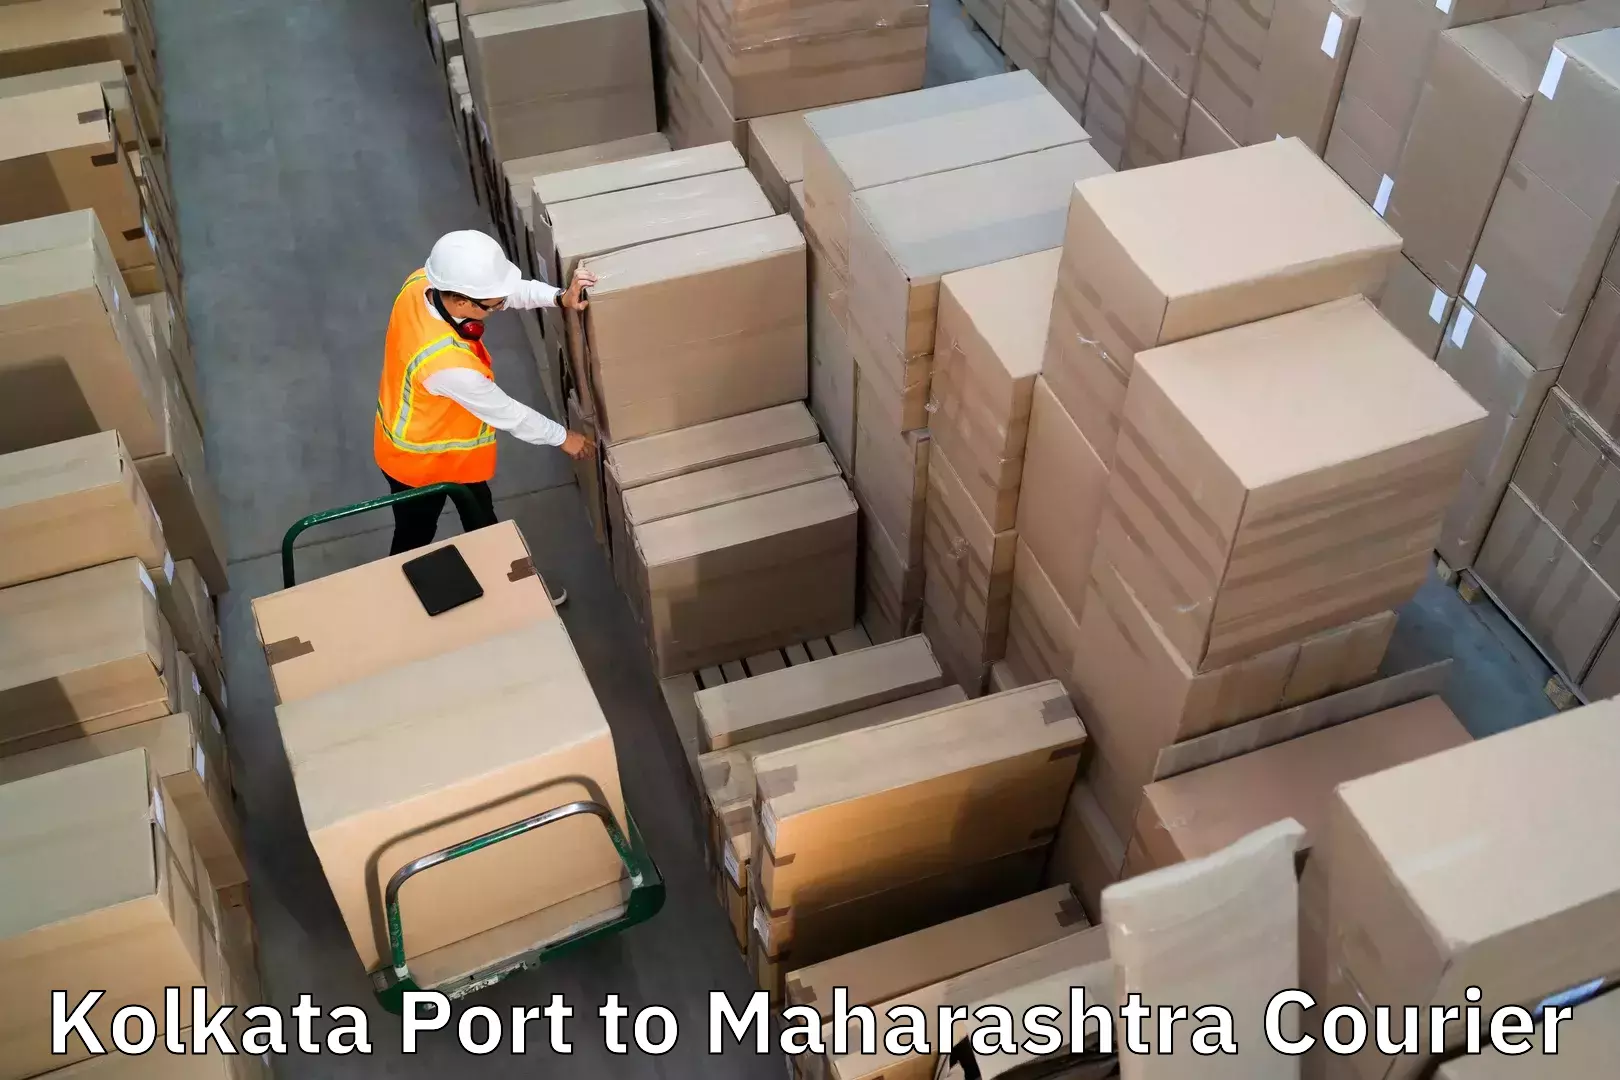 Baggage relocation service Kolkata Port to Devgad